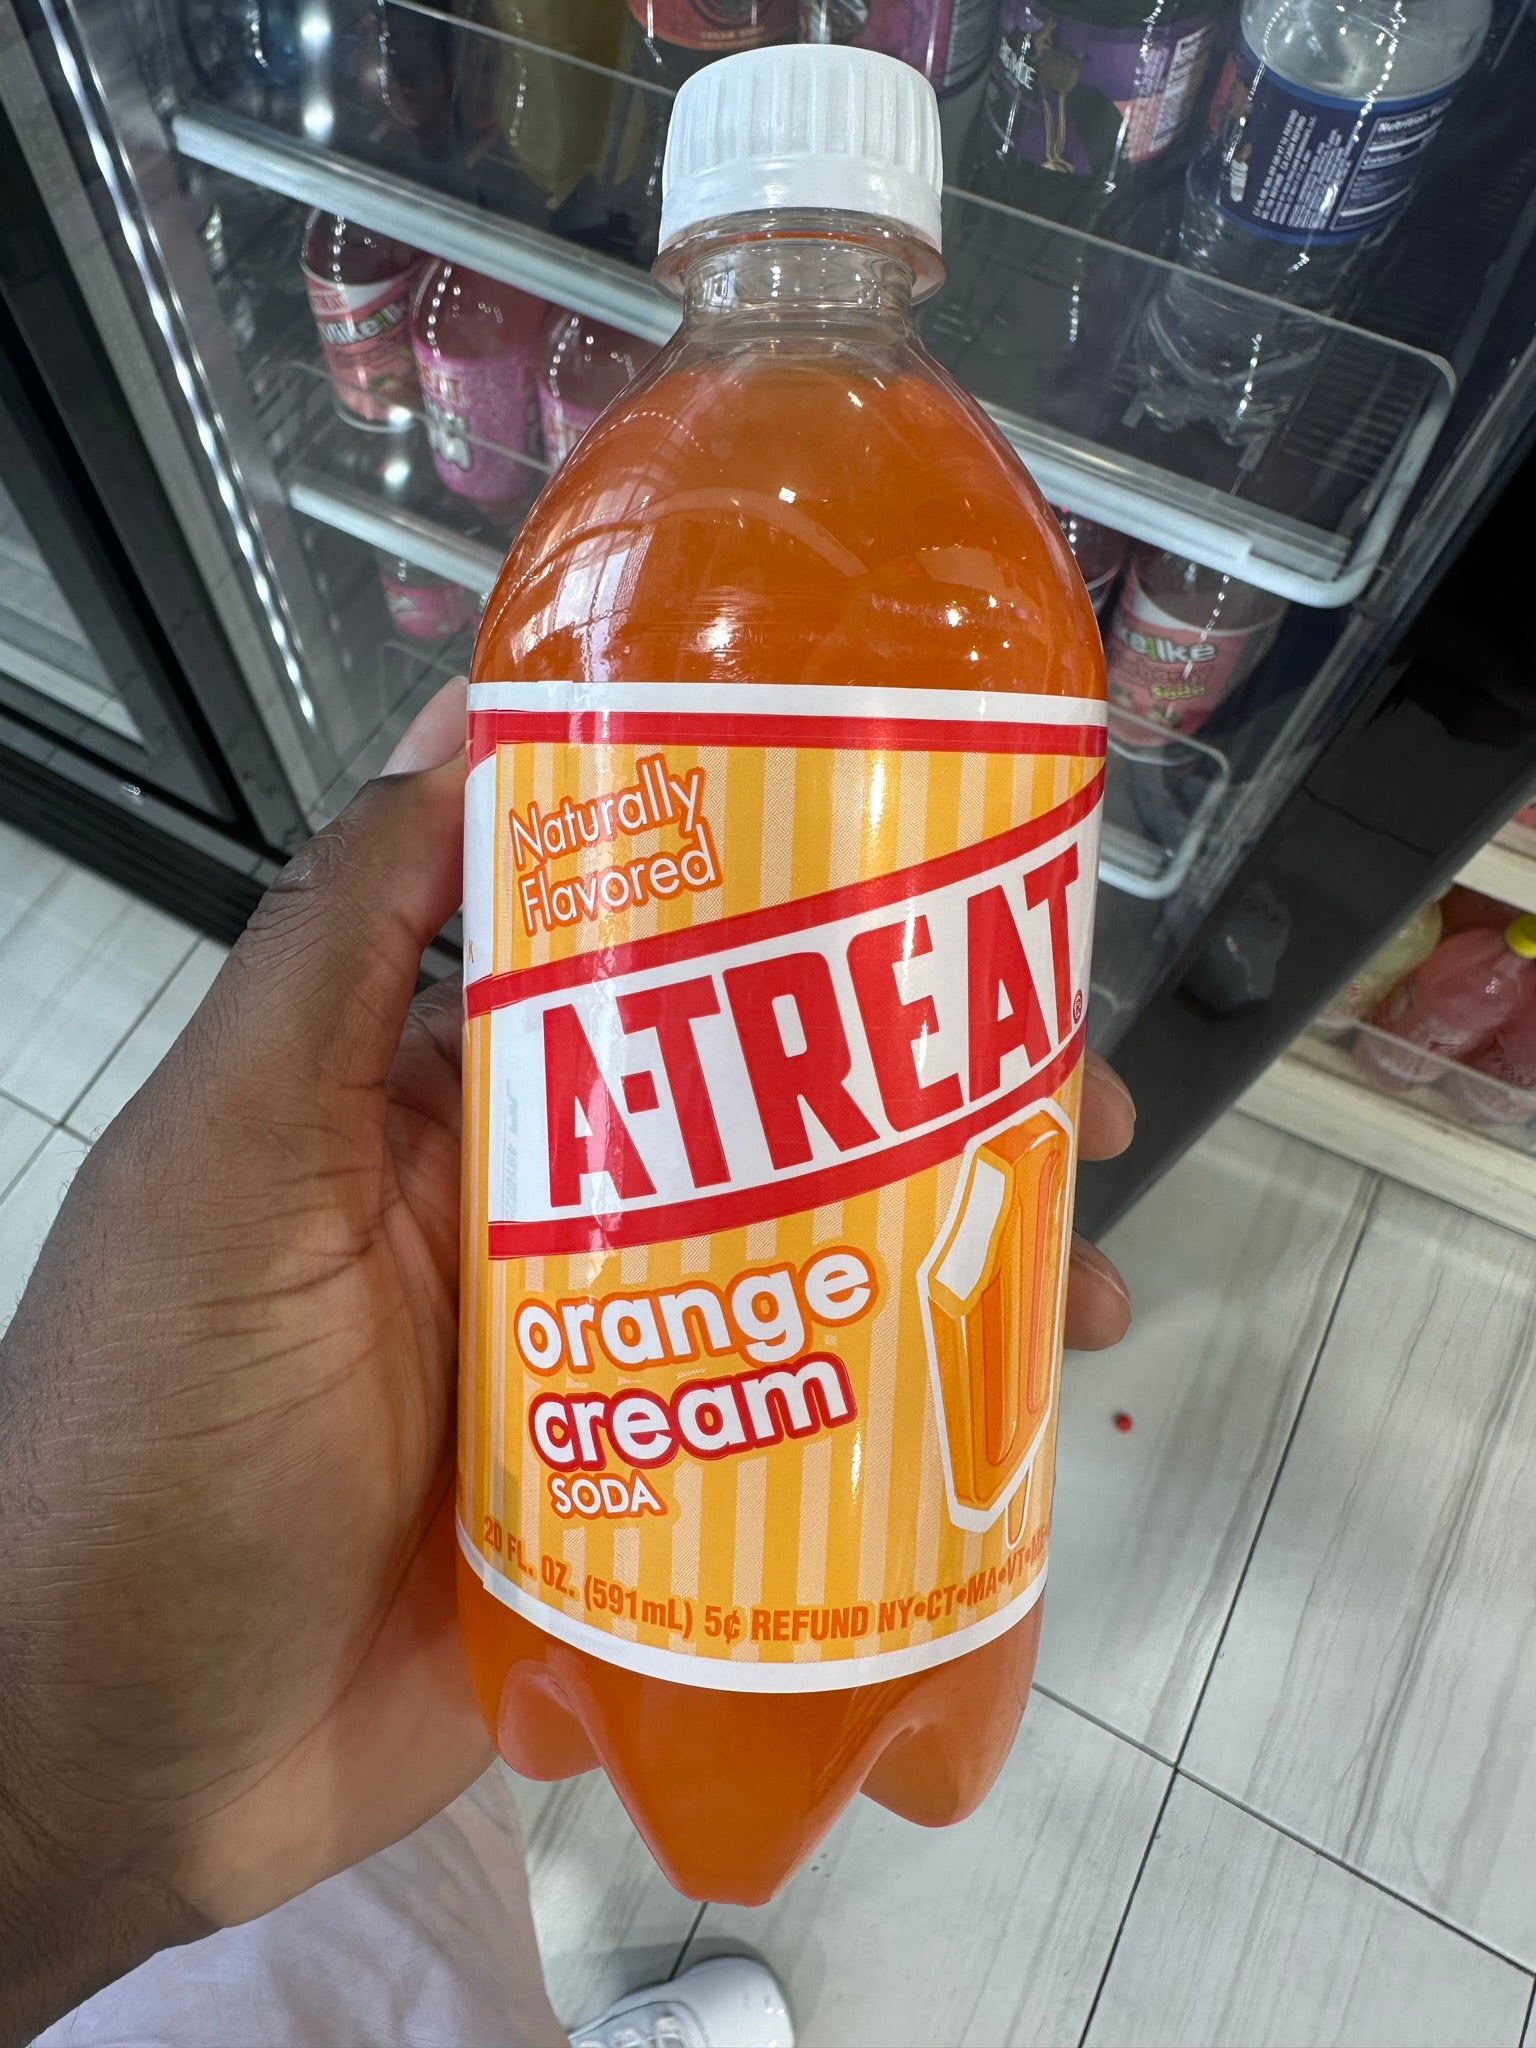 A-Treat Orange Cream Soda